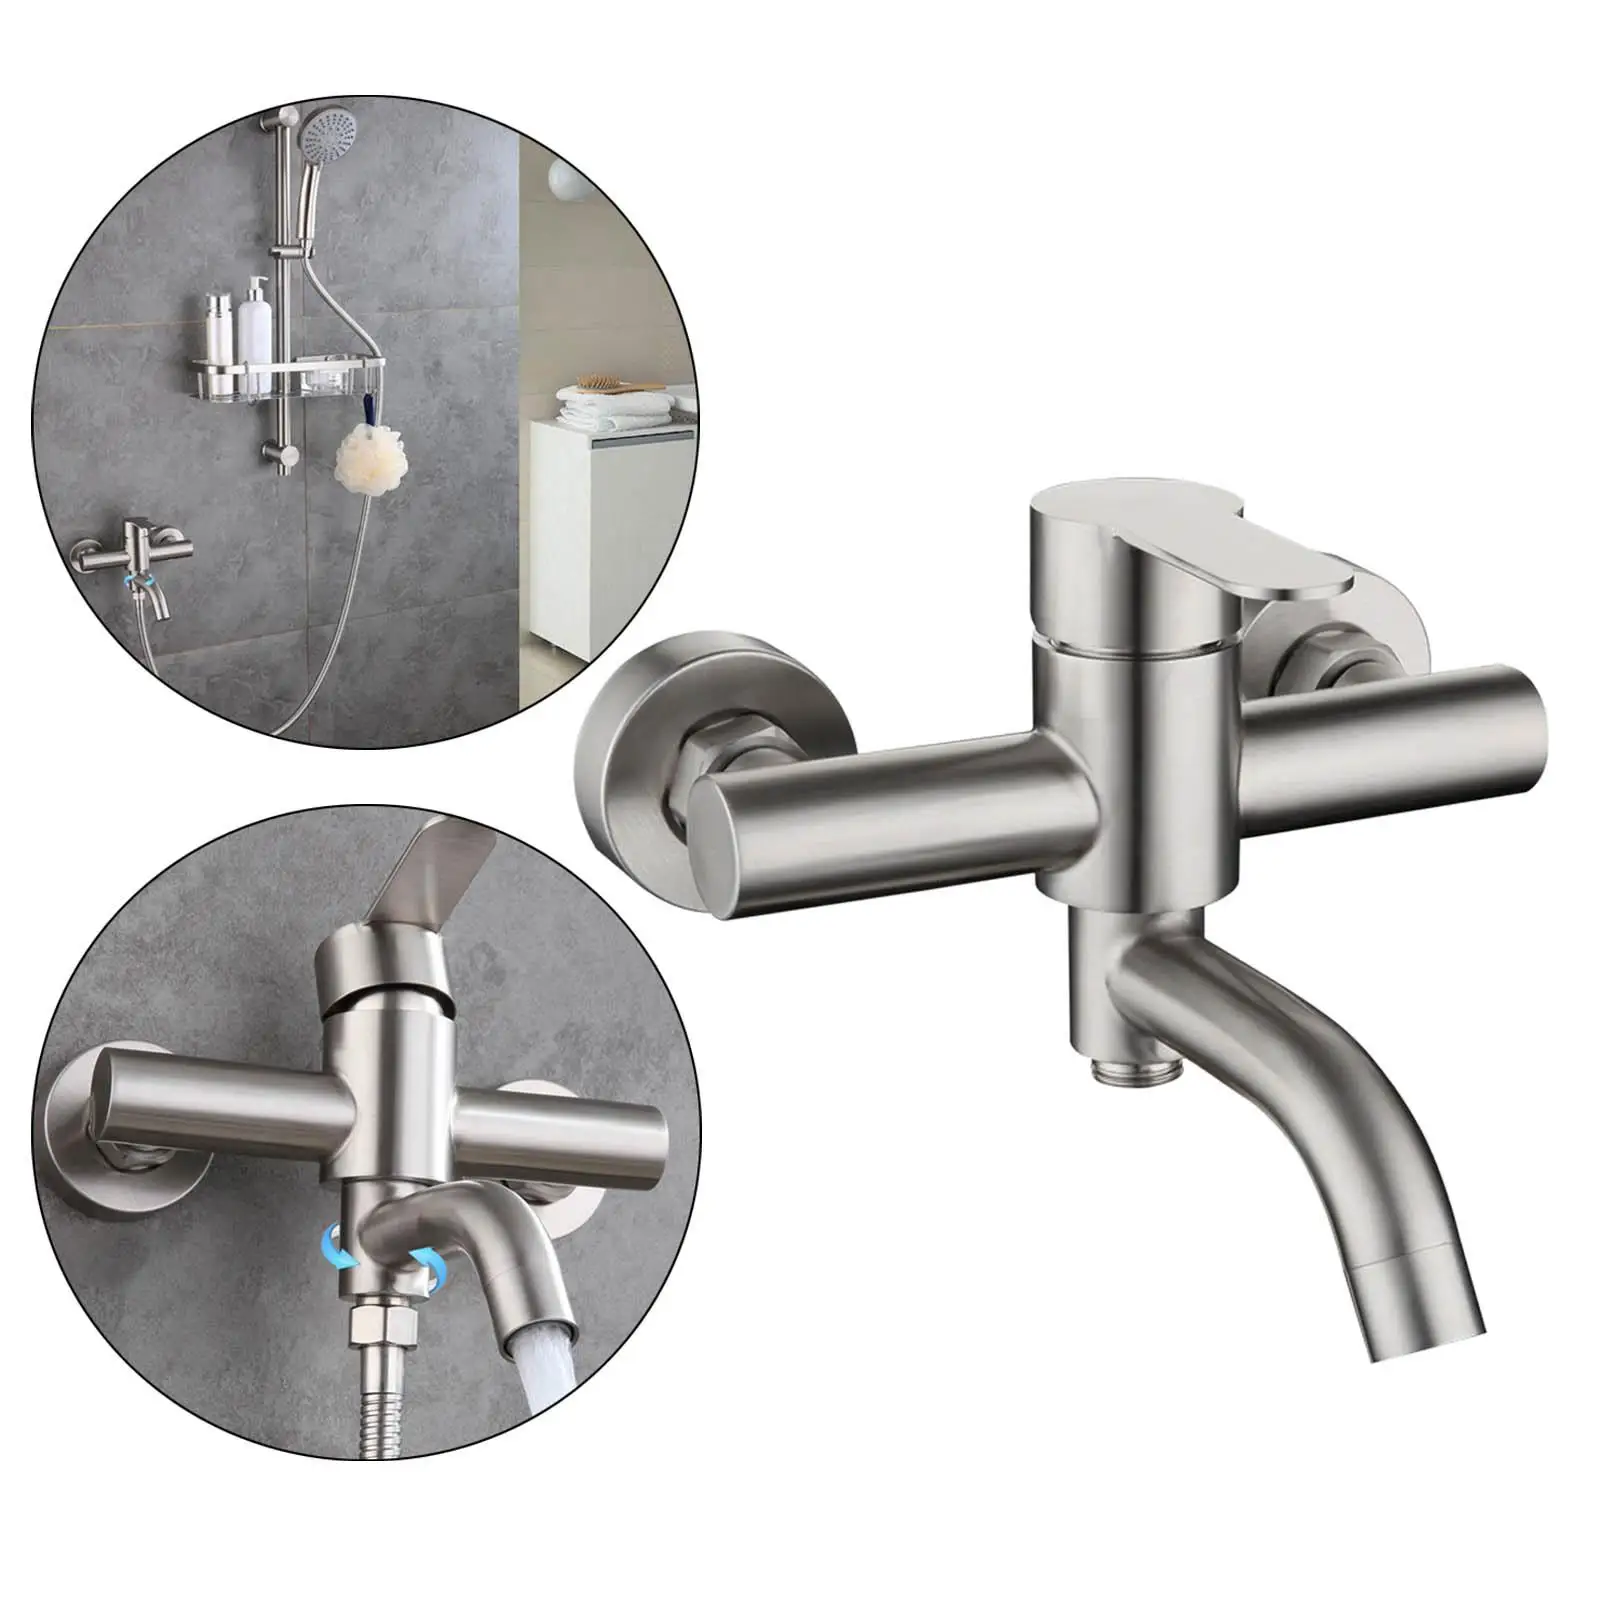 Shower Mixer Faucet Install Range 13-17cm Bathroom Accessories Universal